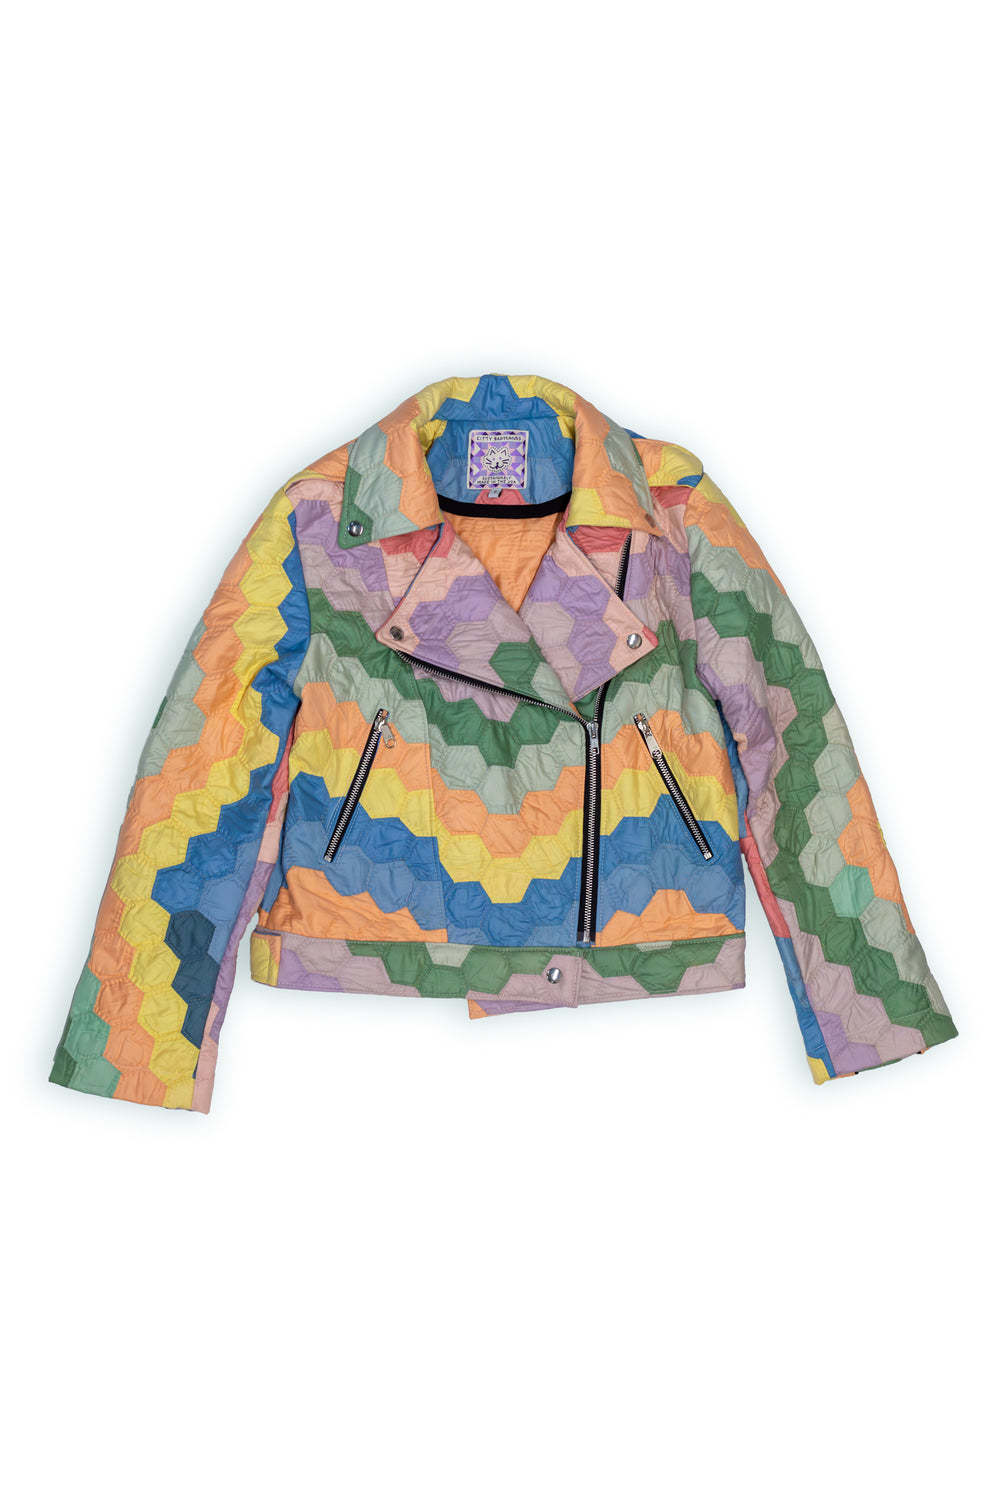 Rainbow Hexagon Adeline Jacket (Small)